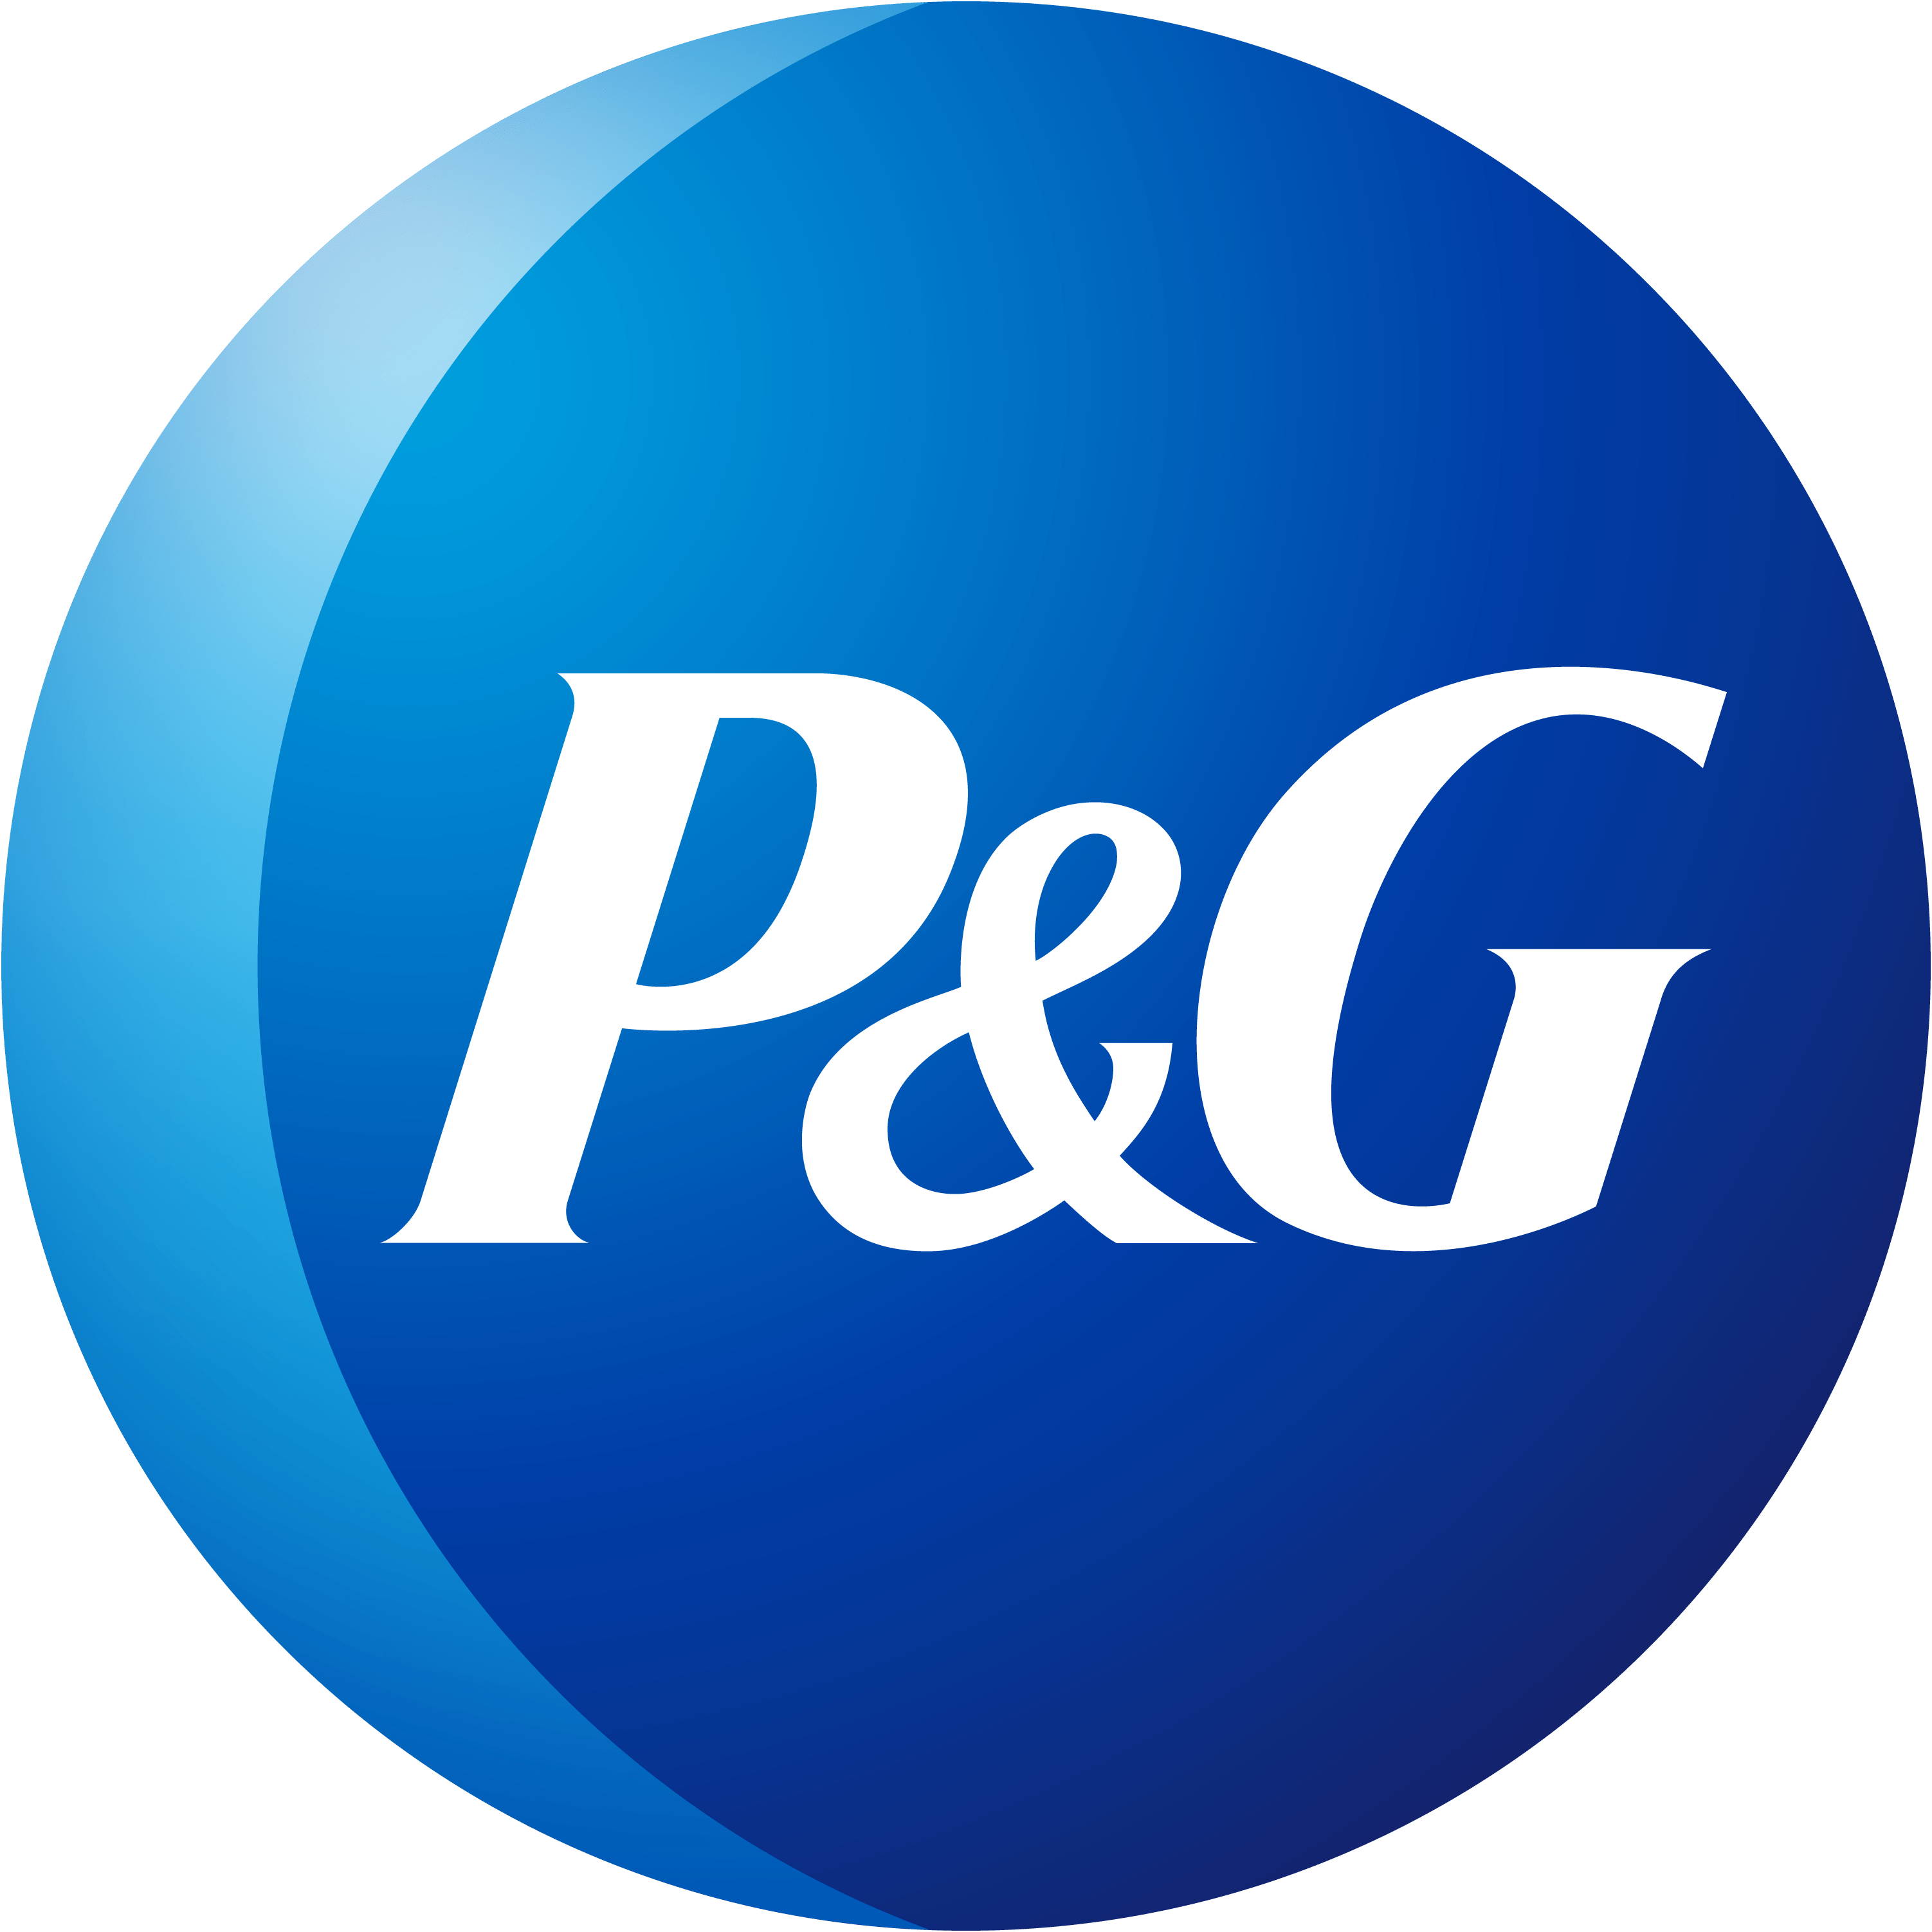 Kleenix Logo - Procter & Gamble Company